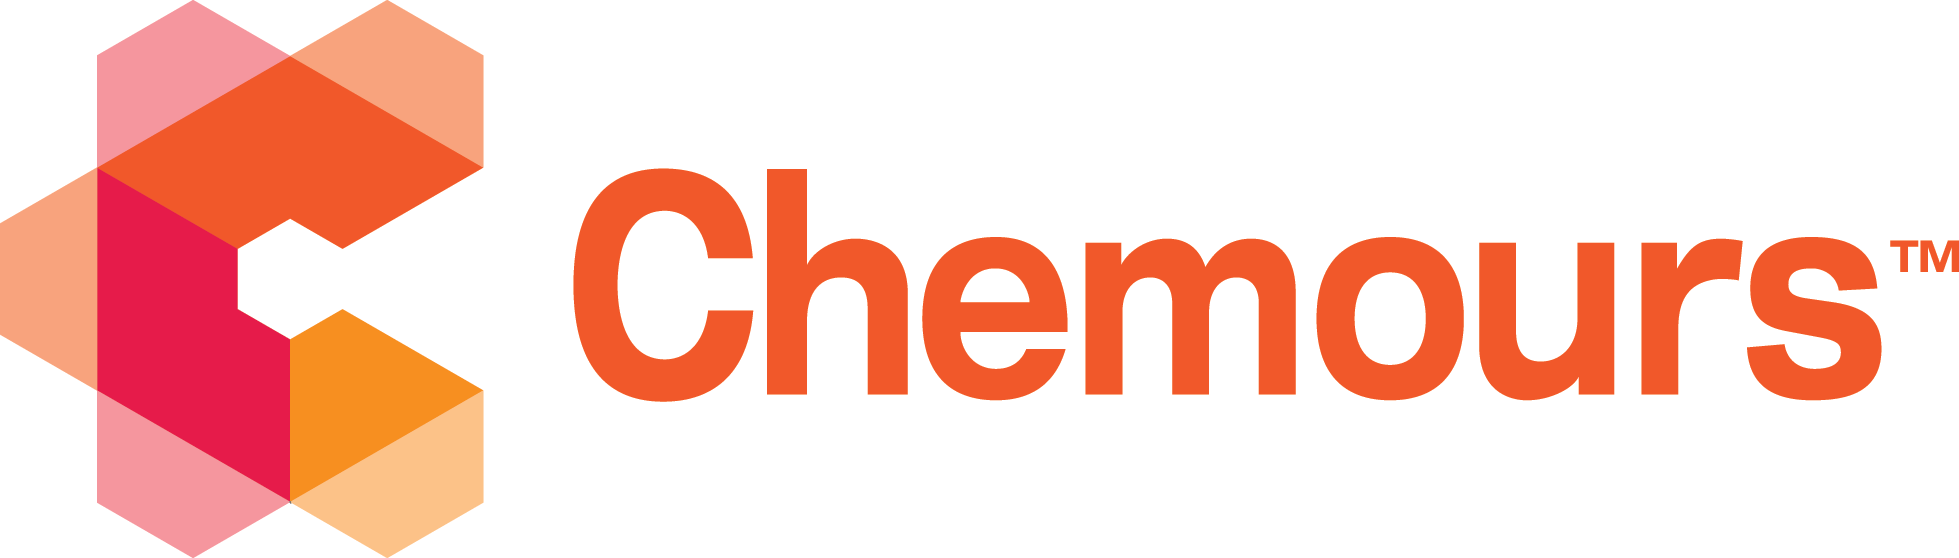 Chemours_Logo_Color_Web_06.2020